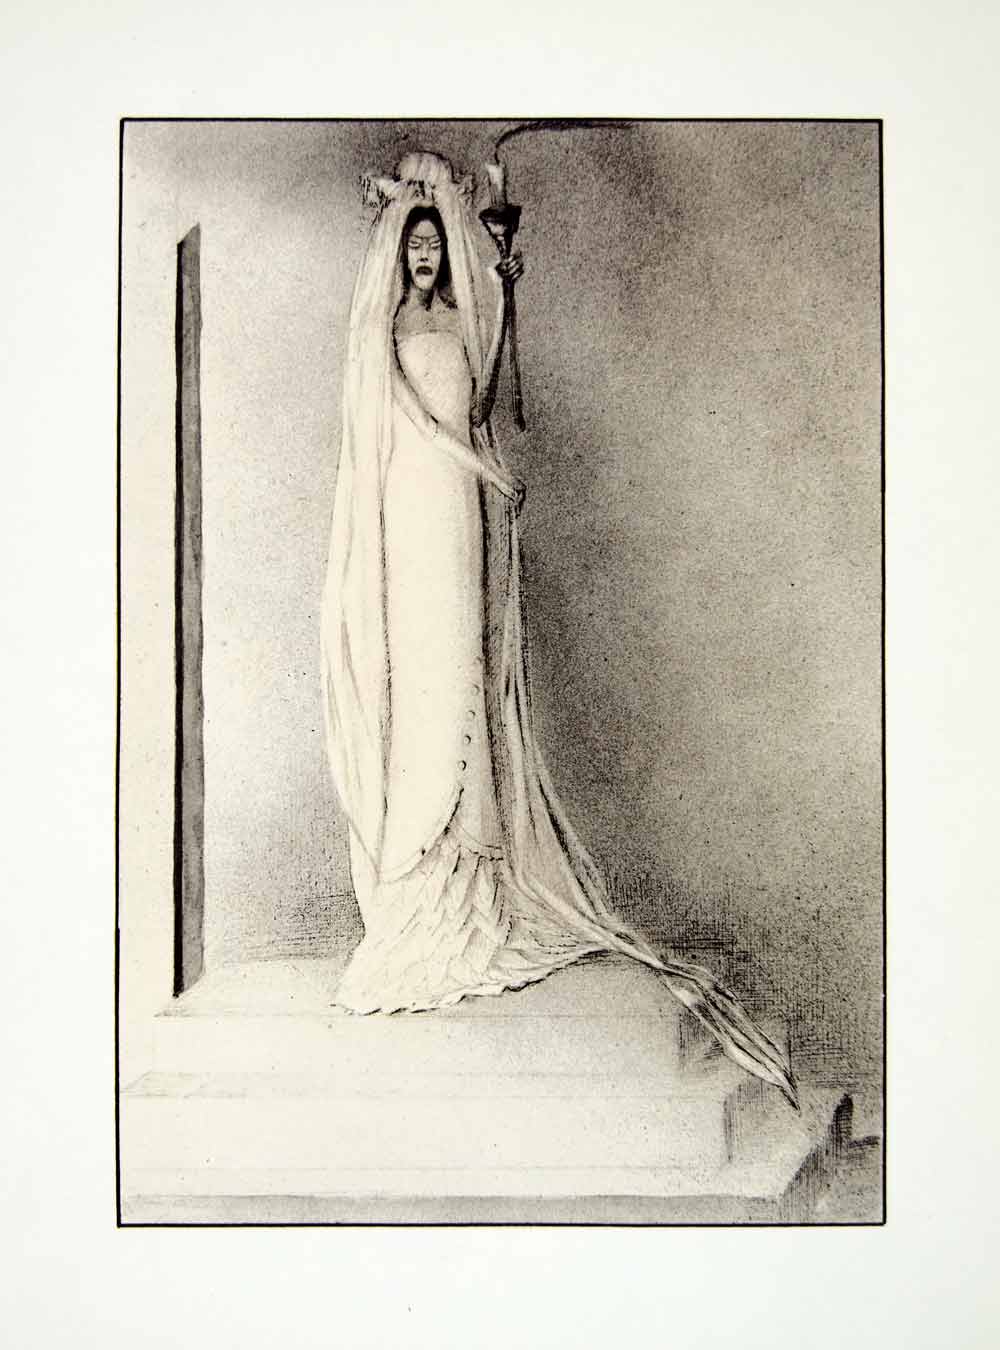 1969 Aquatone Print Alfred Kubin Art Deaths Bride Torch Marriage Morbid XDG2